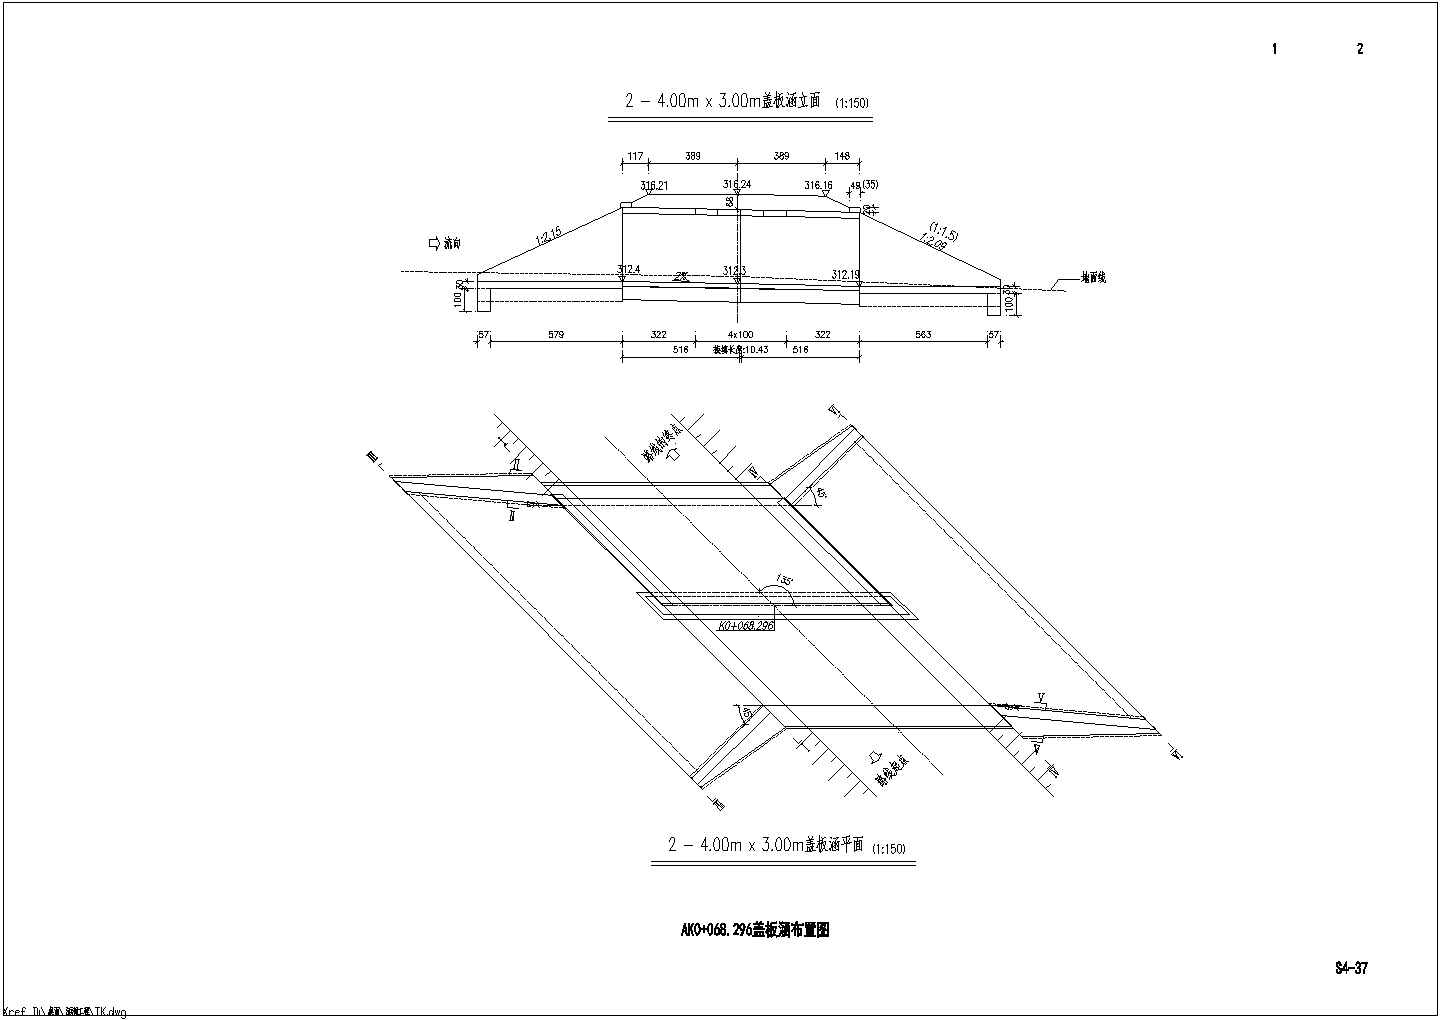 2-4x3m钢筋混凝土盖板涵设计图